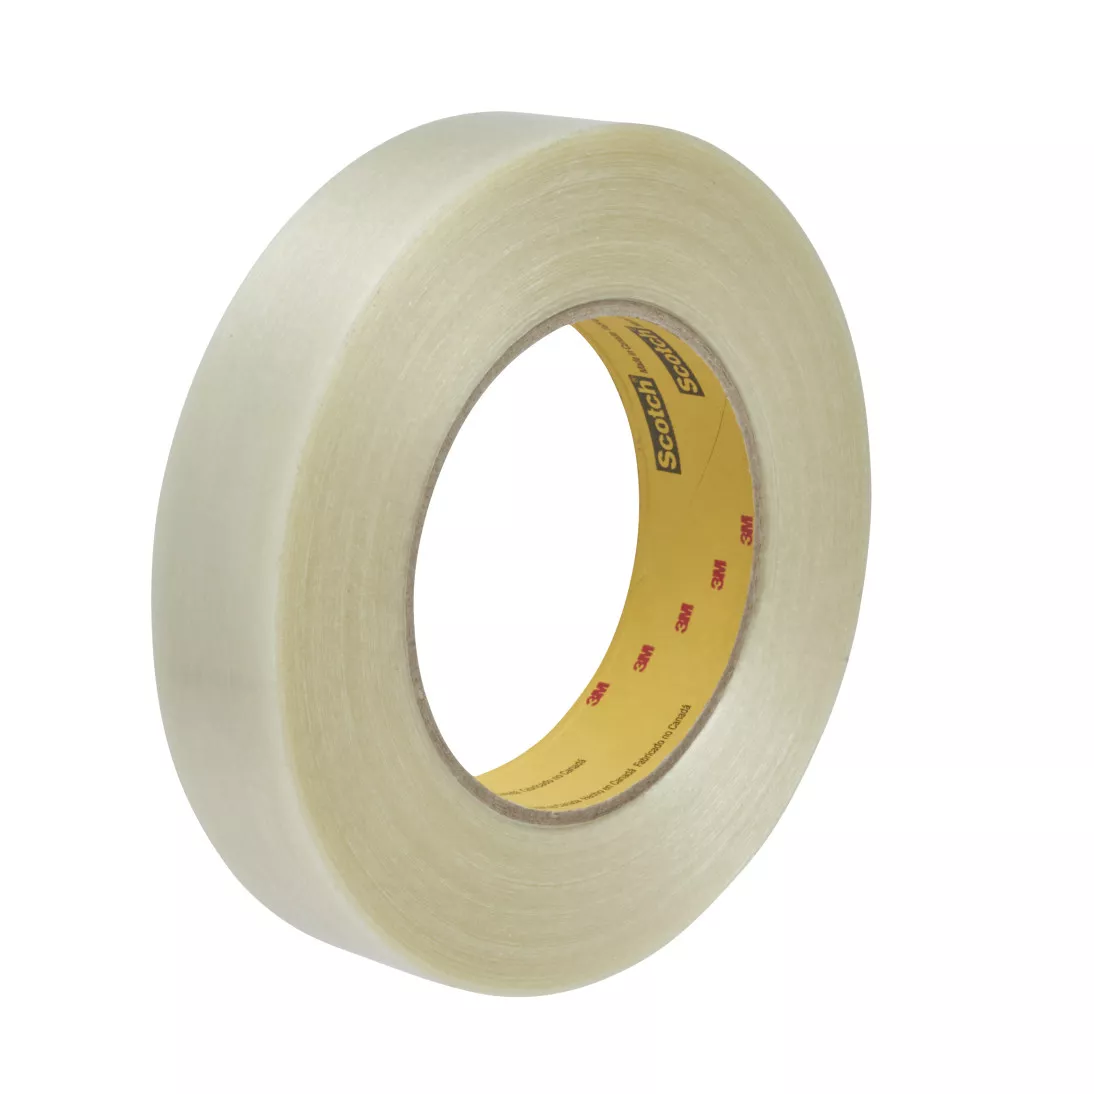 Scotch® Filament Tape 898MSR, Clear, 24 mm x 55 m, 6 mil, 36 rolls per
case